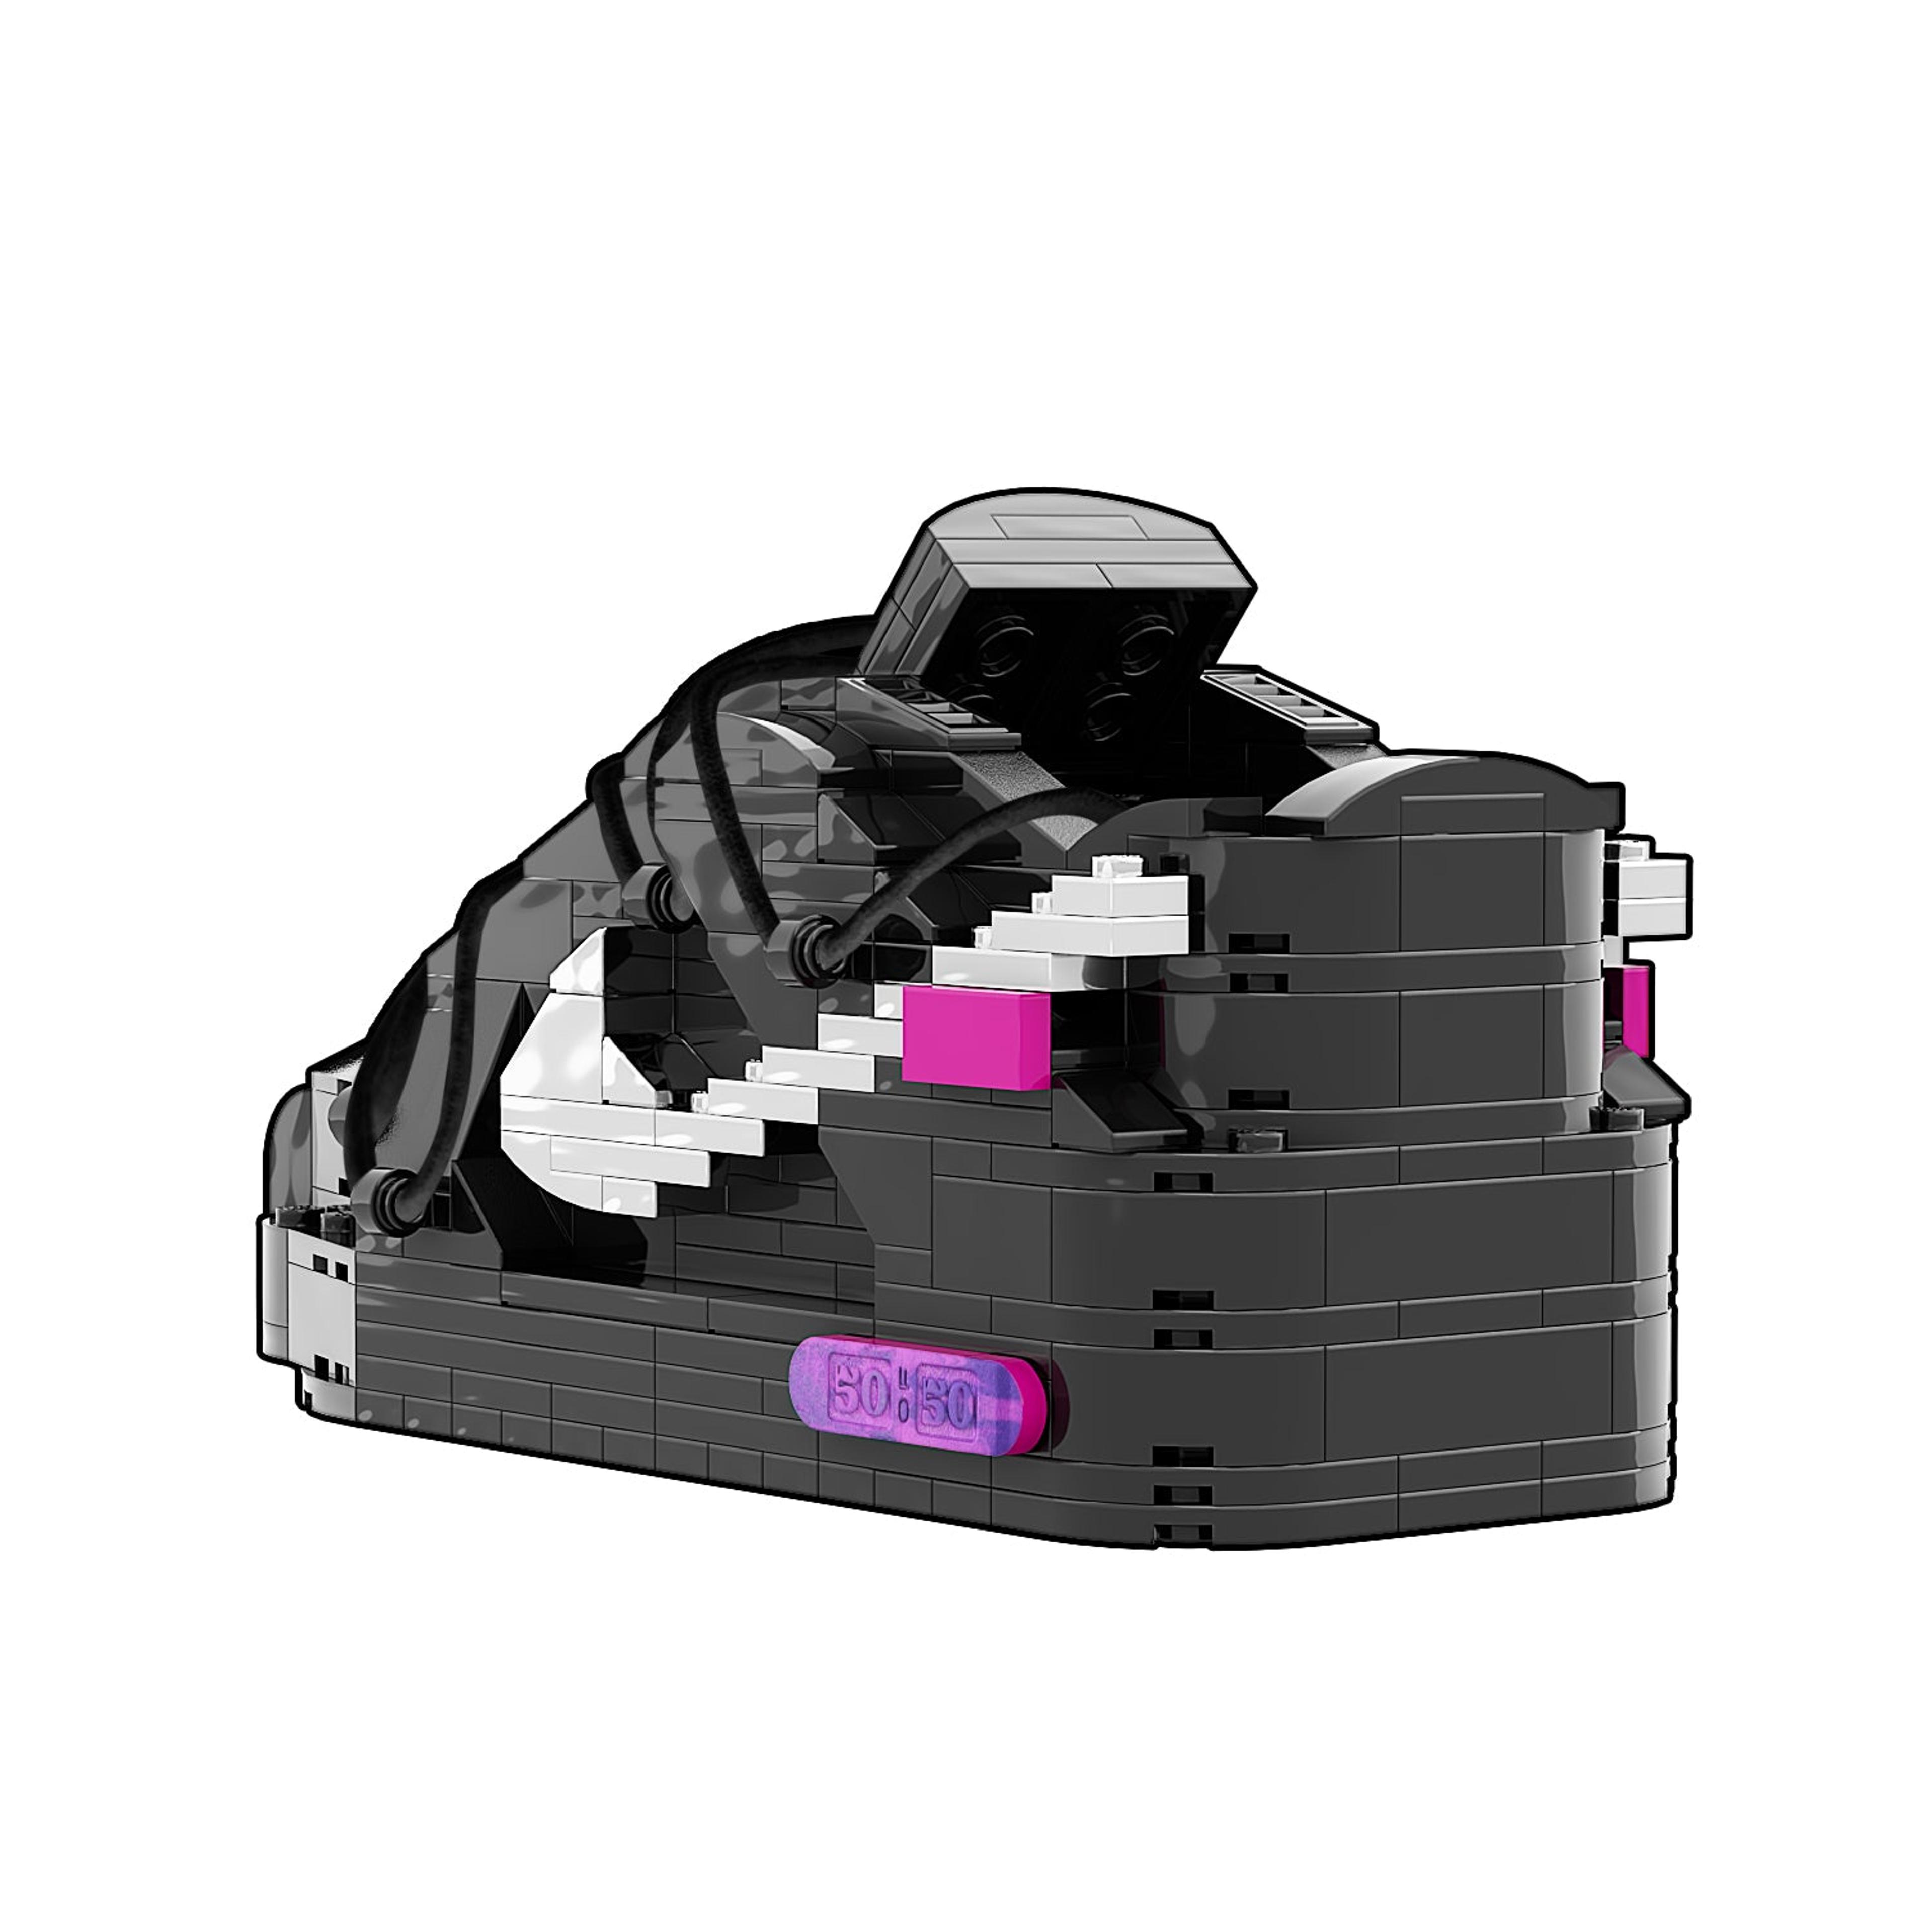 Alternate View 3 of REGULAR SB Dunk "Off-White Lot 50" Sneaker Bricks with Mini Figu